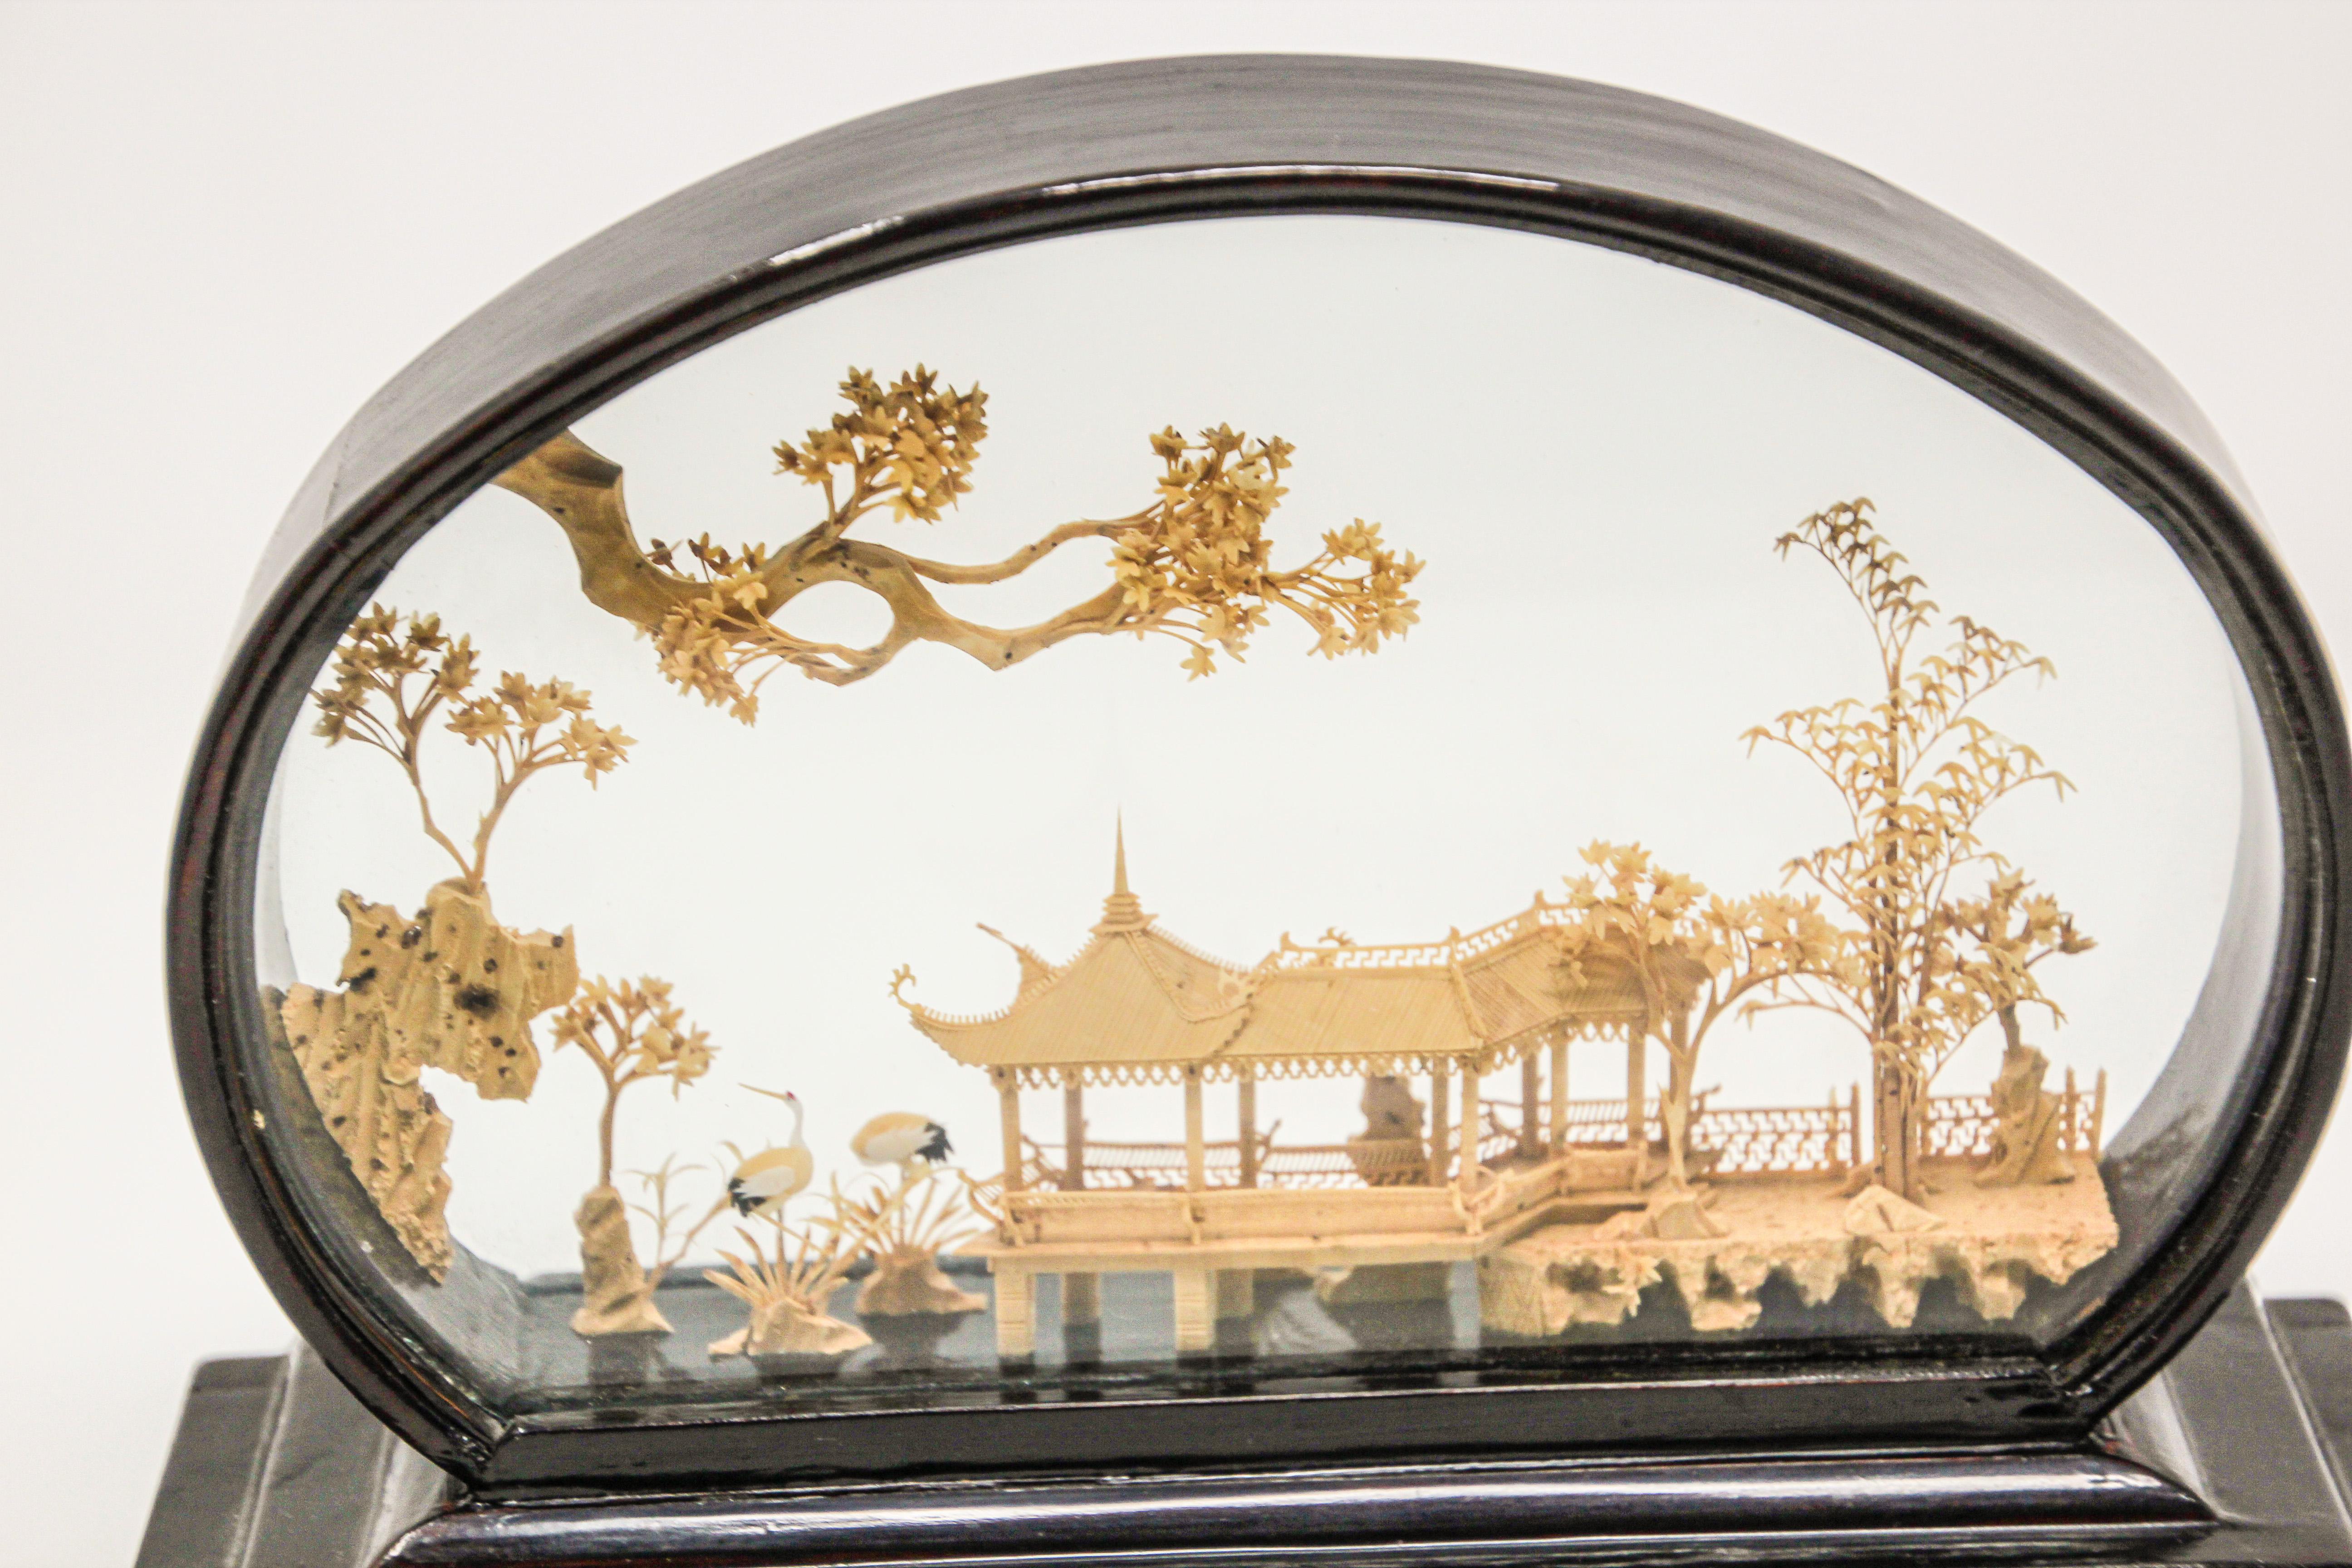 Chinese San You Miniature Architectural Diorama Carved Cork Scene 6